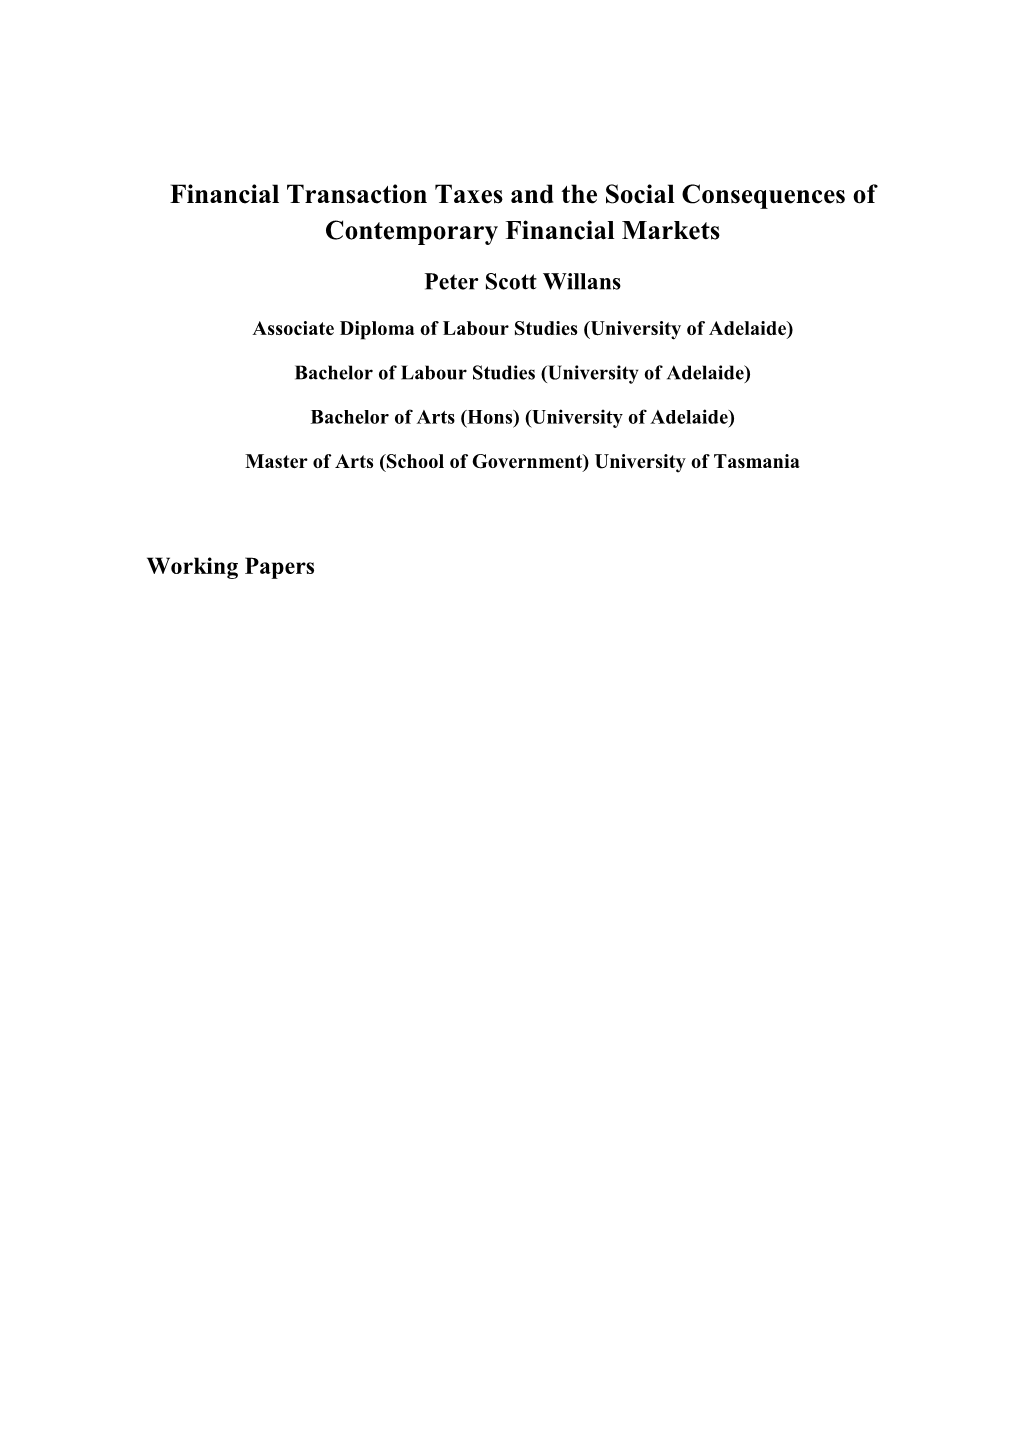 Financial Transaction Taxes and the Social Consequences of Contemporary Financial Markets